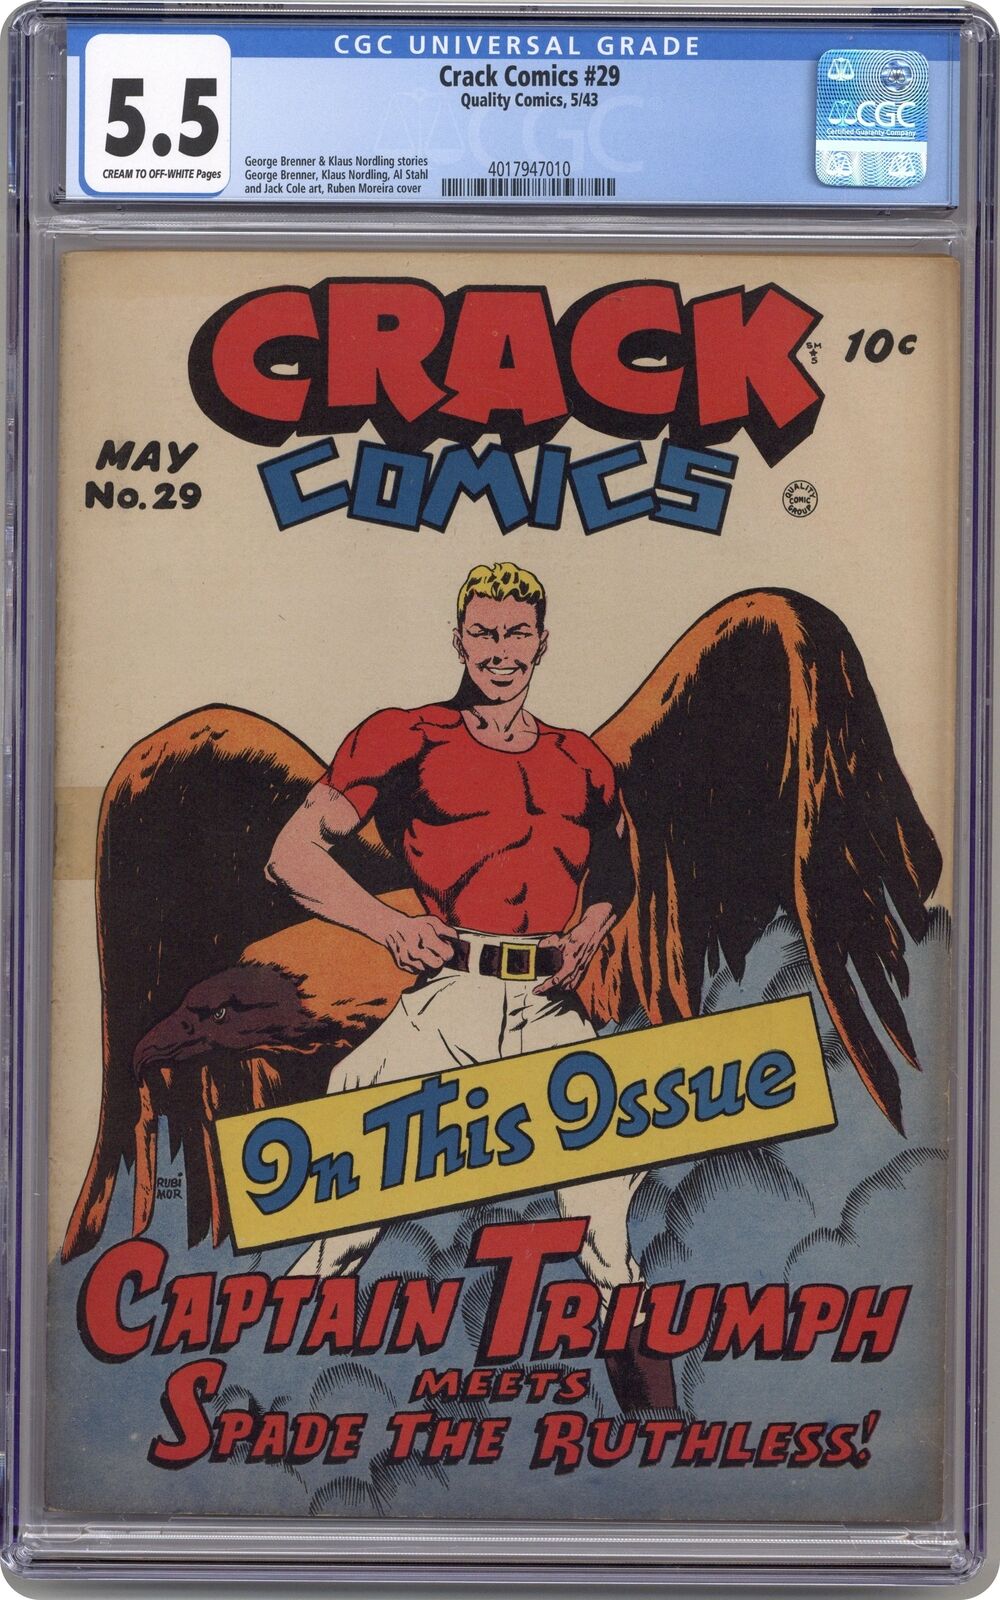 Crack Comics #29 CGC 5.5 1943 4017947010